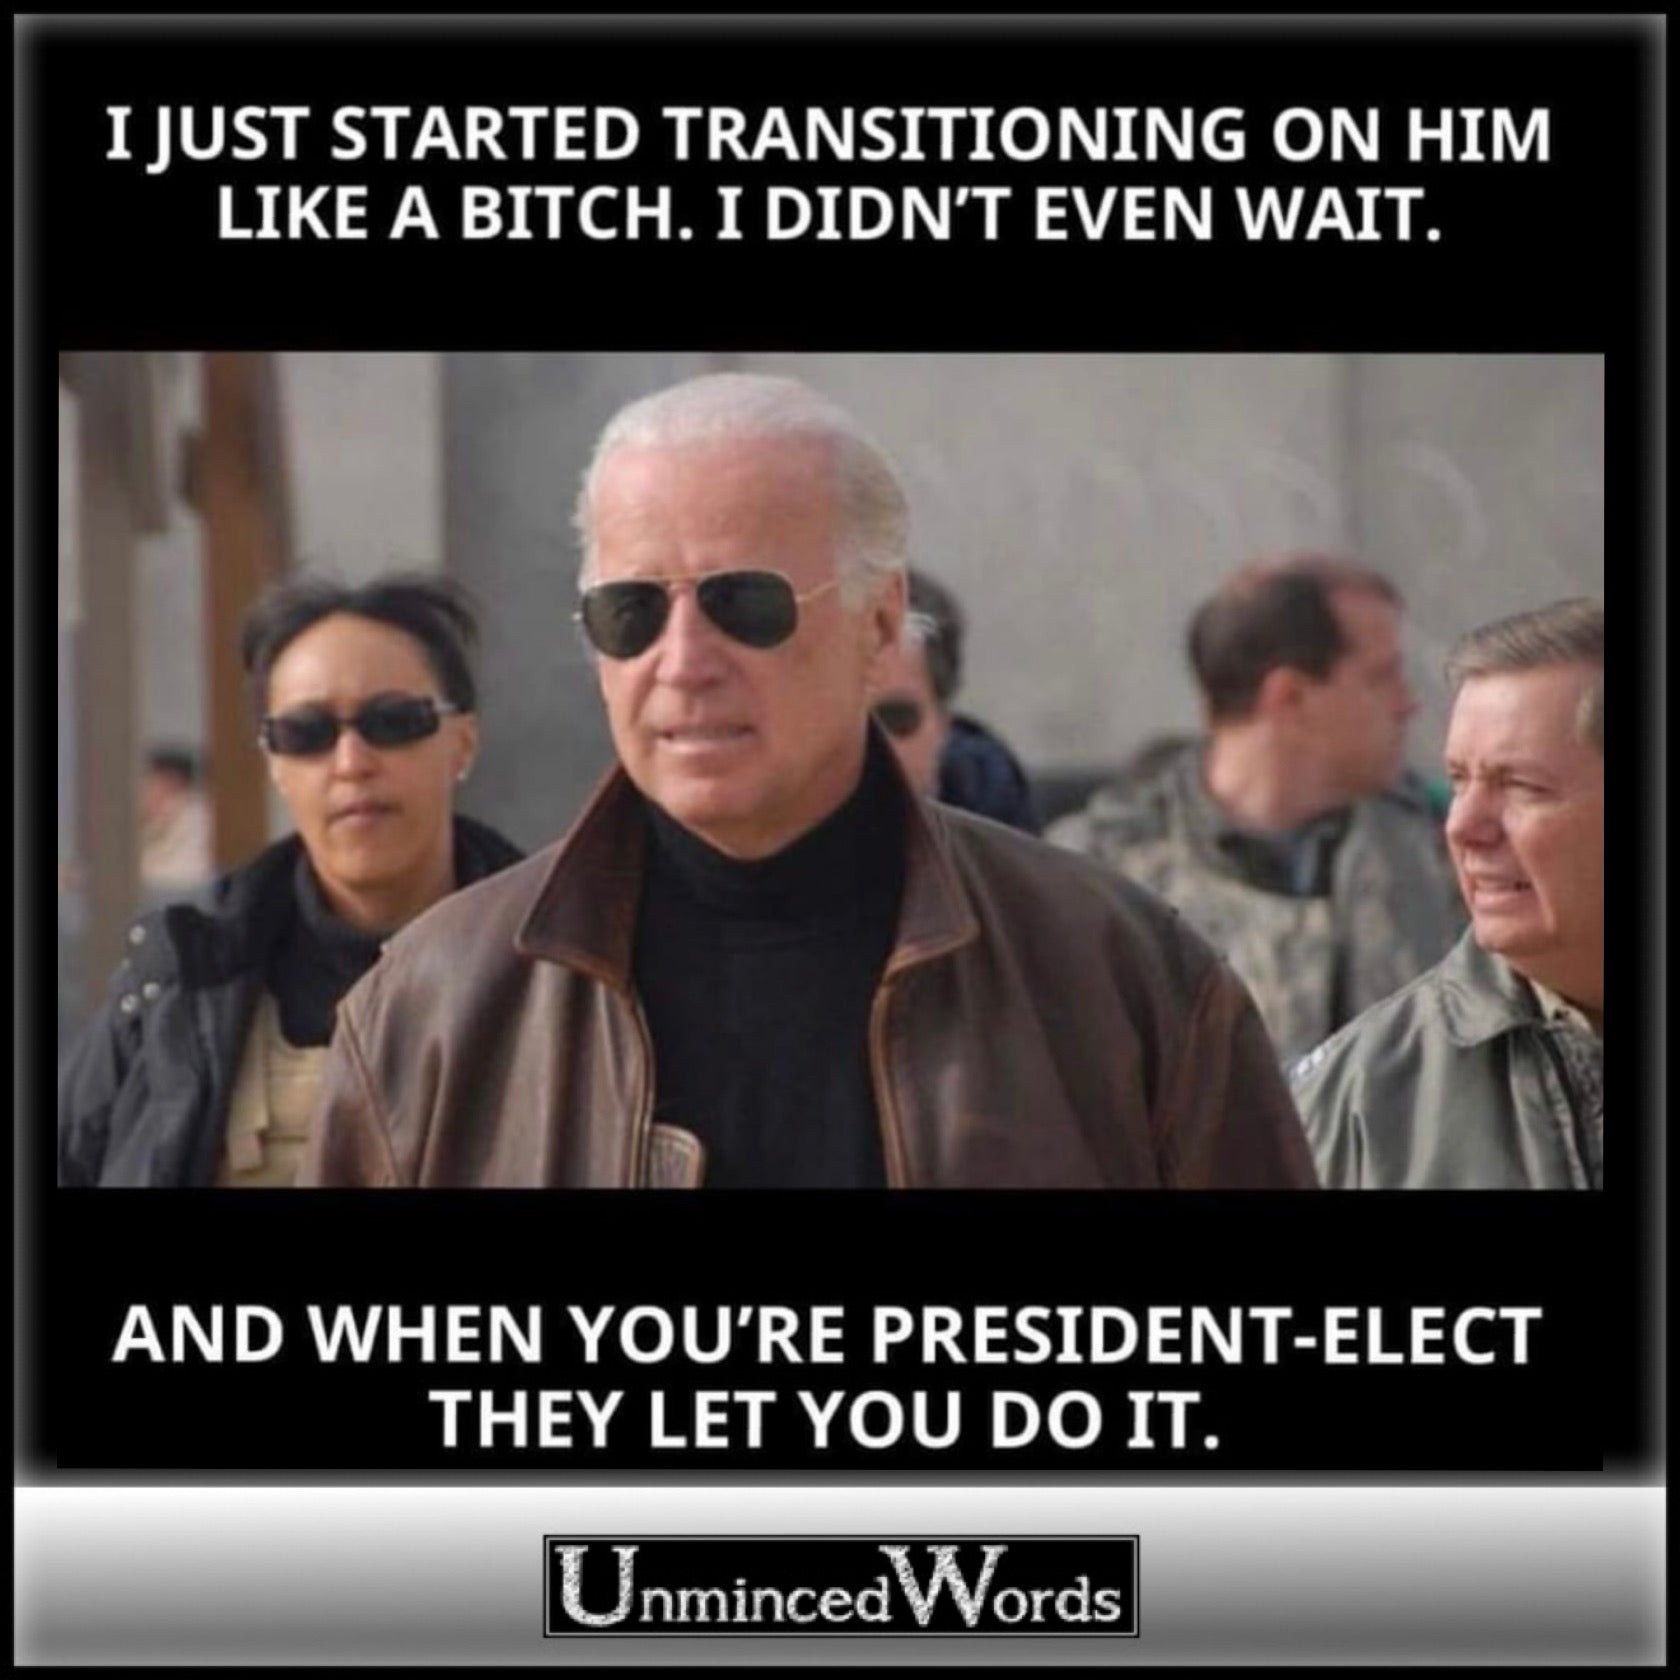 President Biden with Attitude meme is strong.